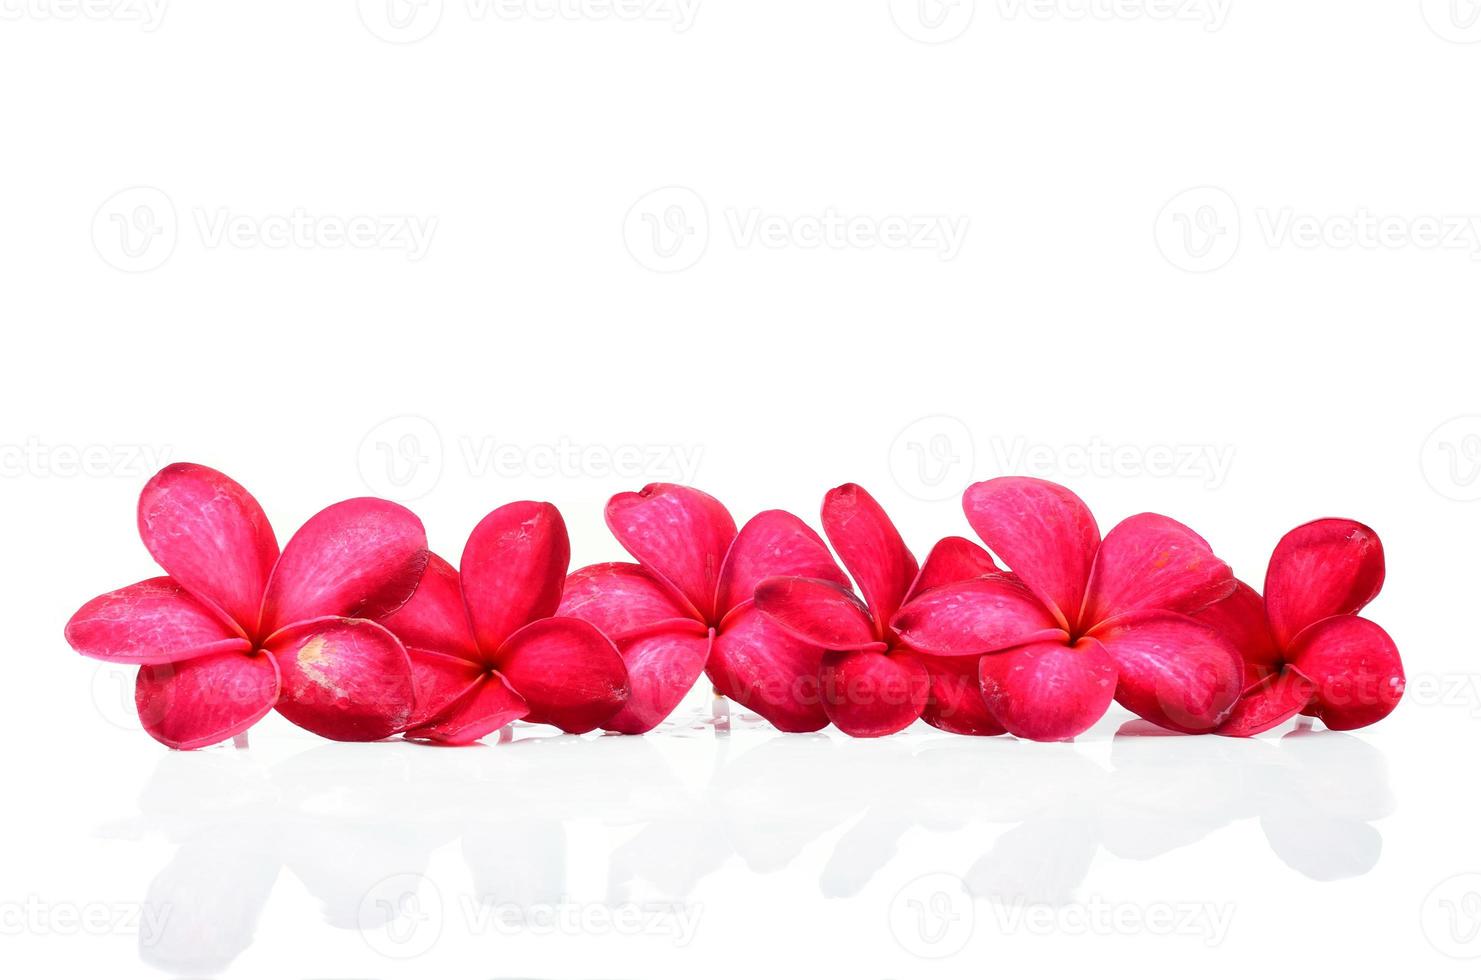 bellissimi fiori di frangipane foto